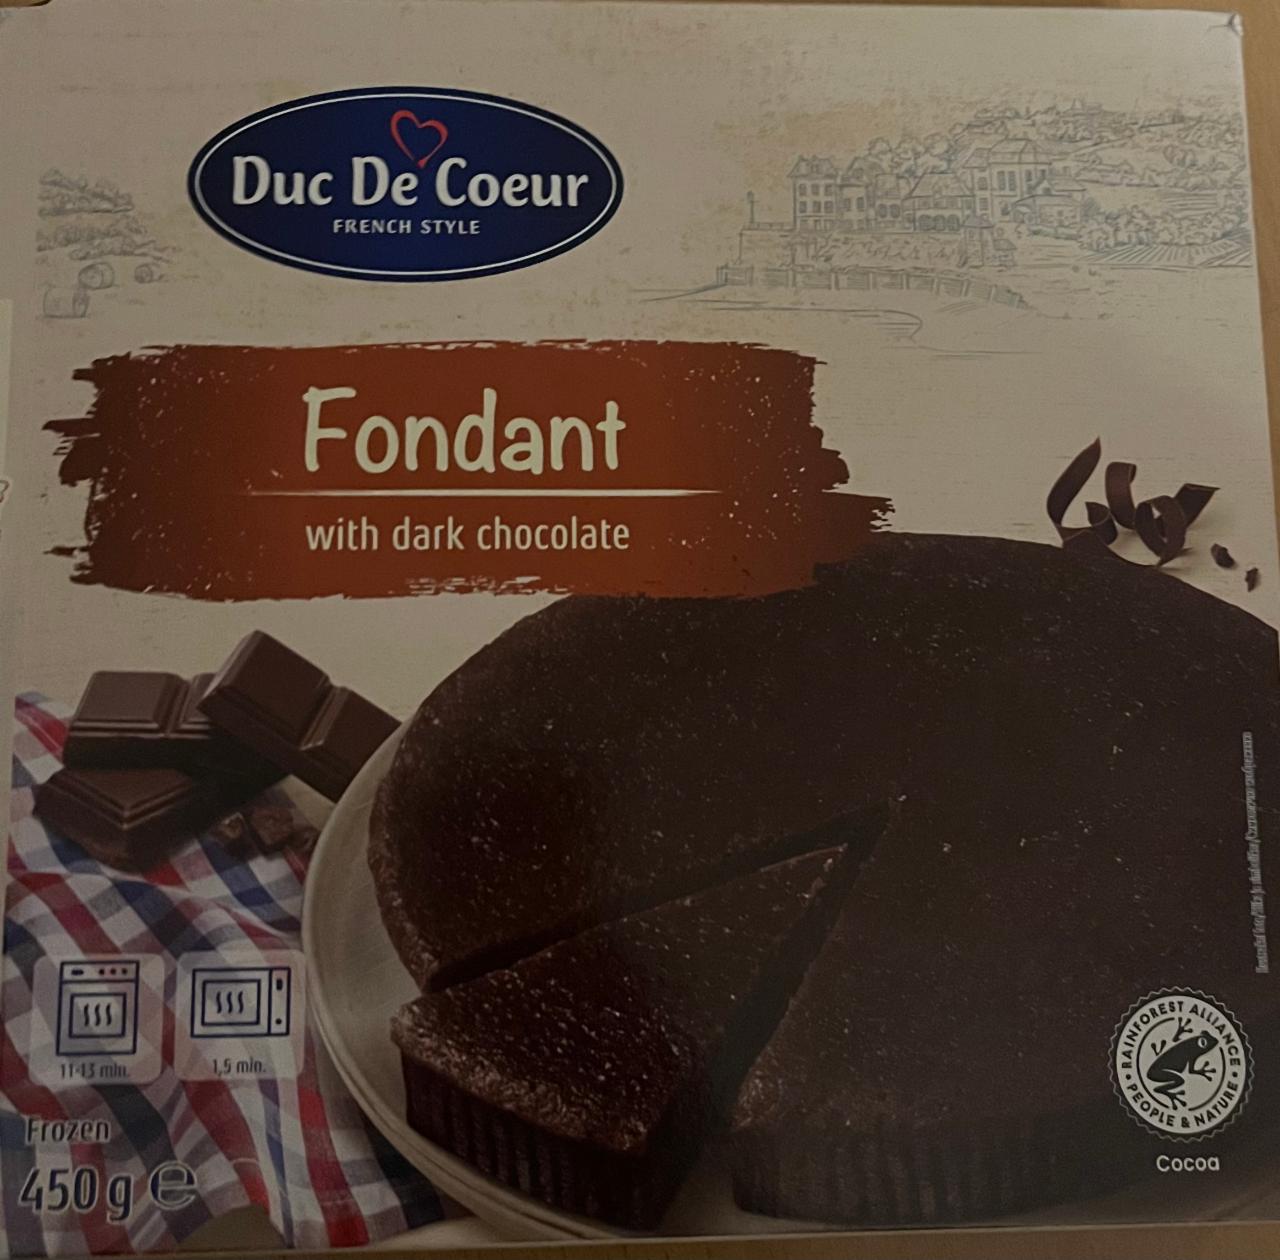 Fotografie - Fondant with dark chocolate Duc De Coeur